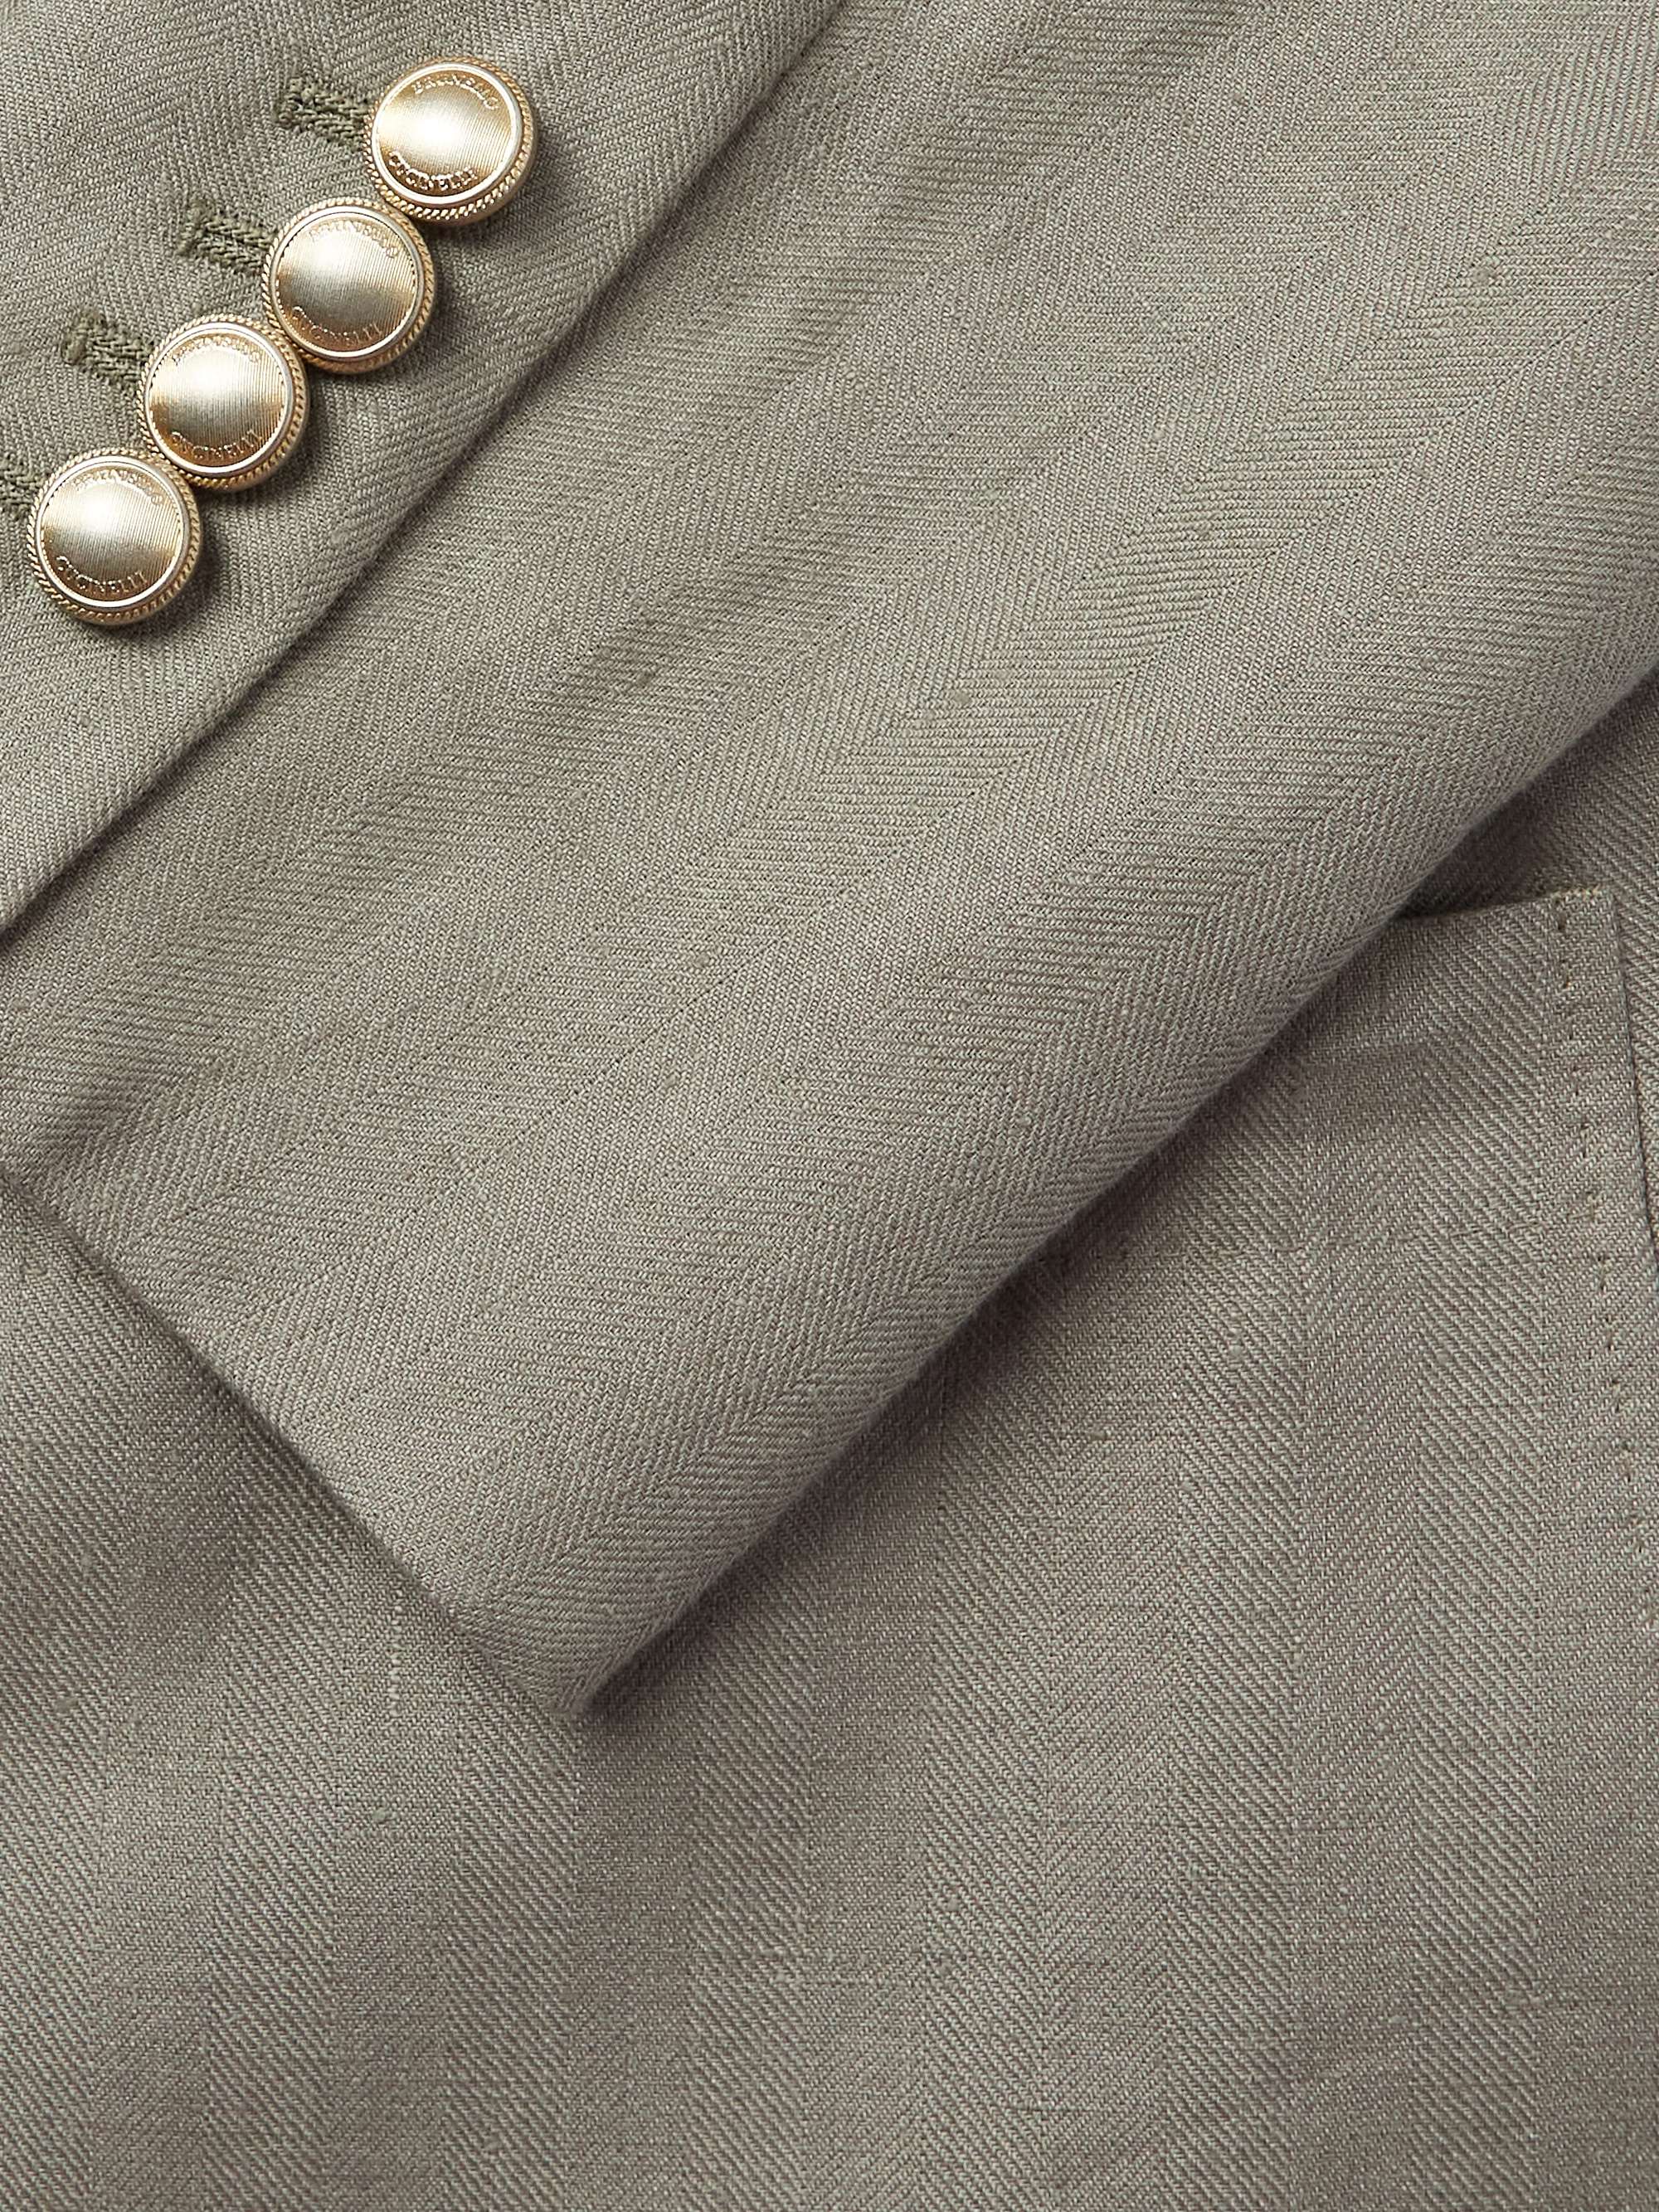 BRUNELLO CUCINELLI Double-Breasted Herringbone Linen Suit Jacket